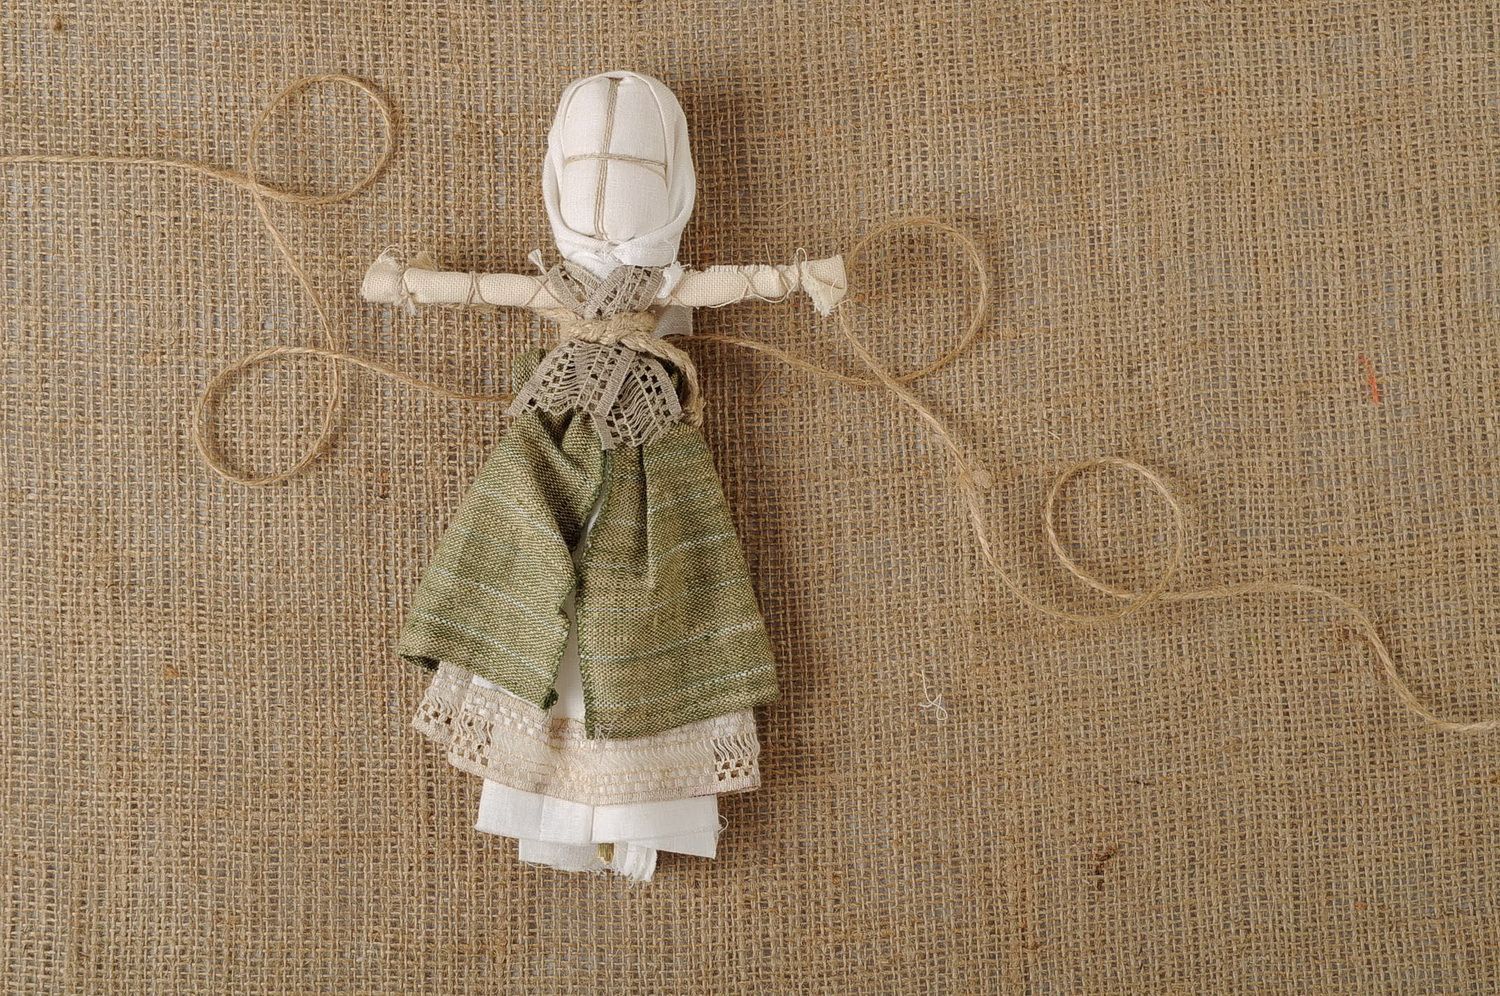 Motanka doll made of flax photo 1